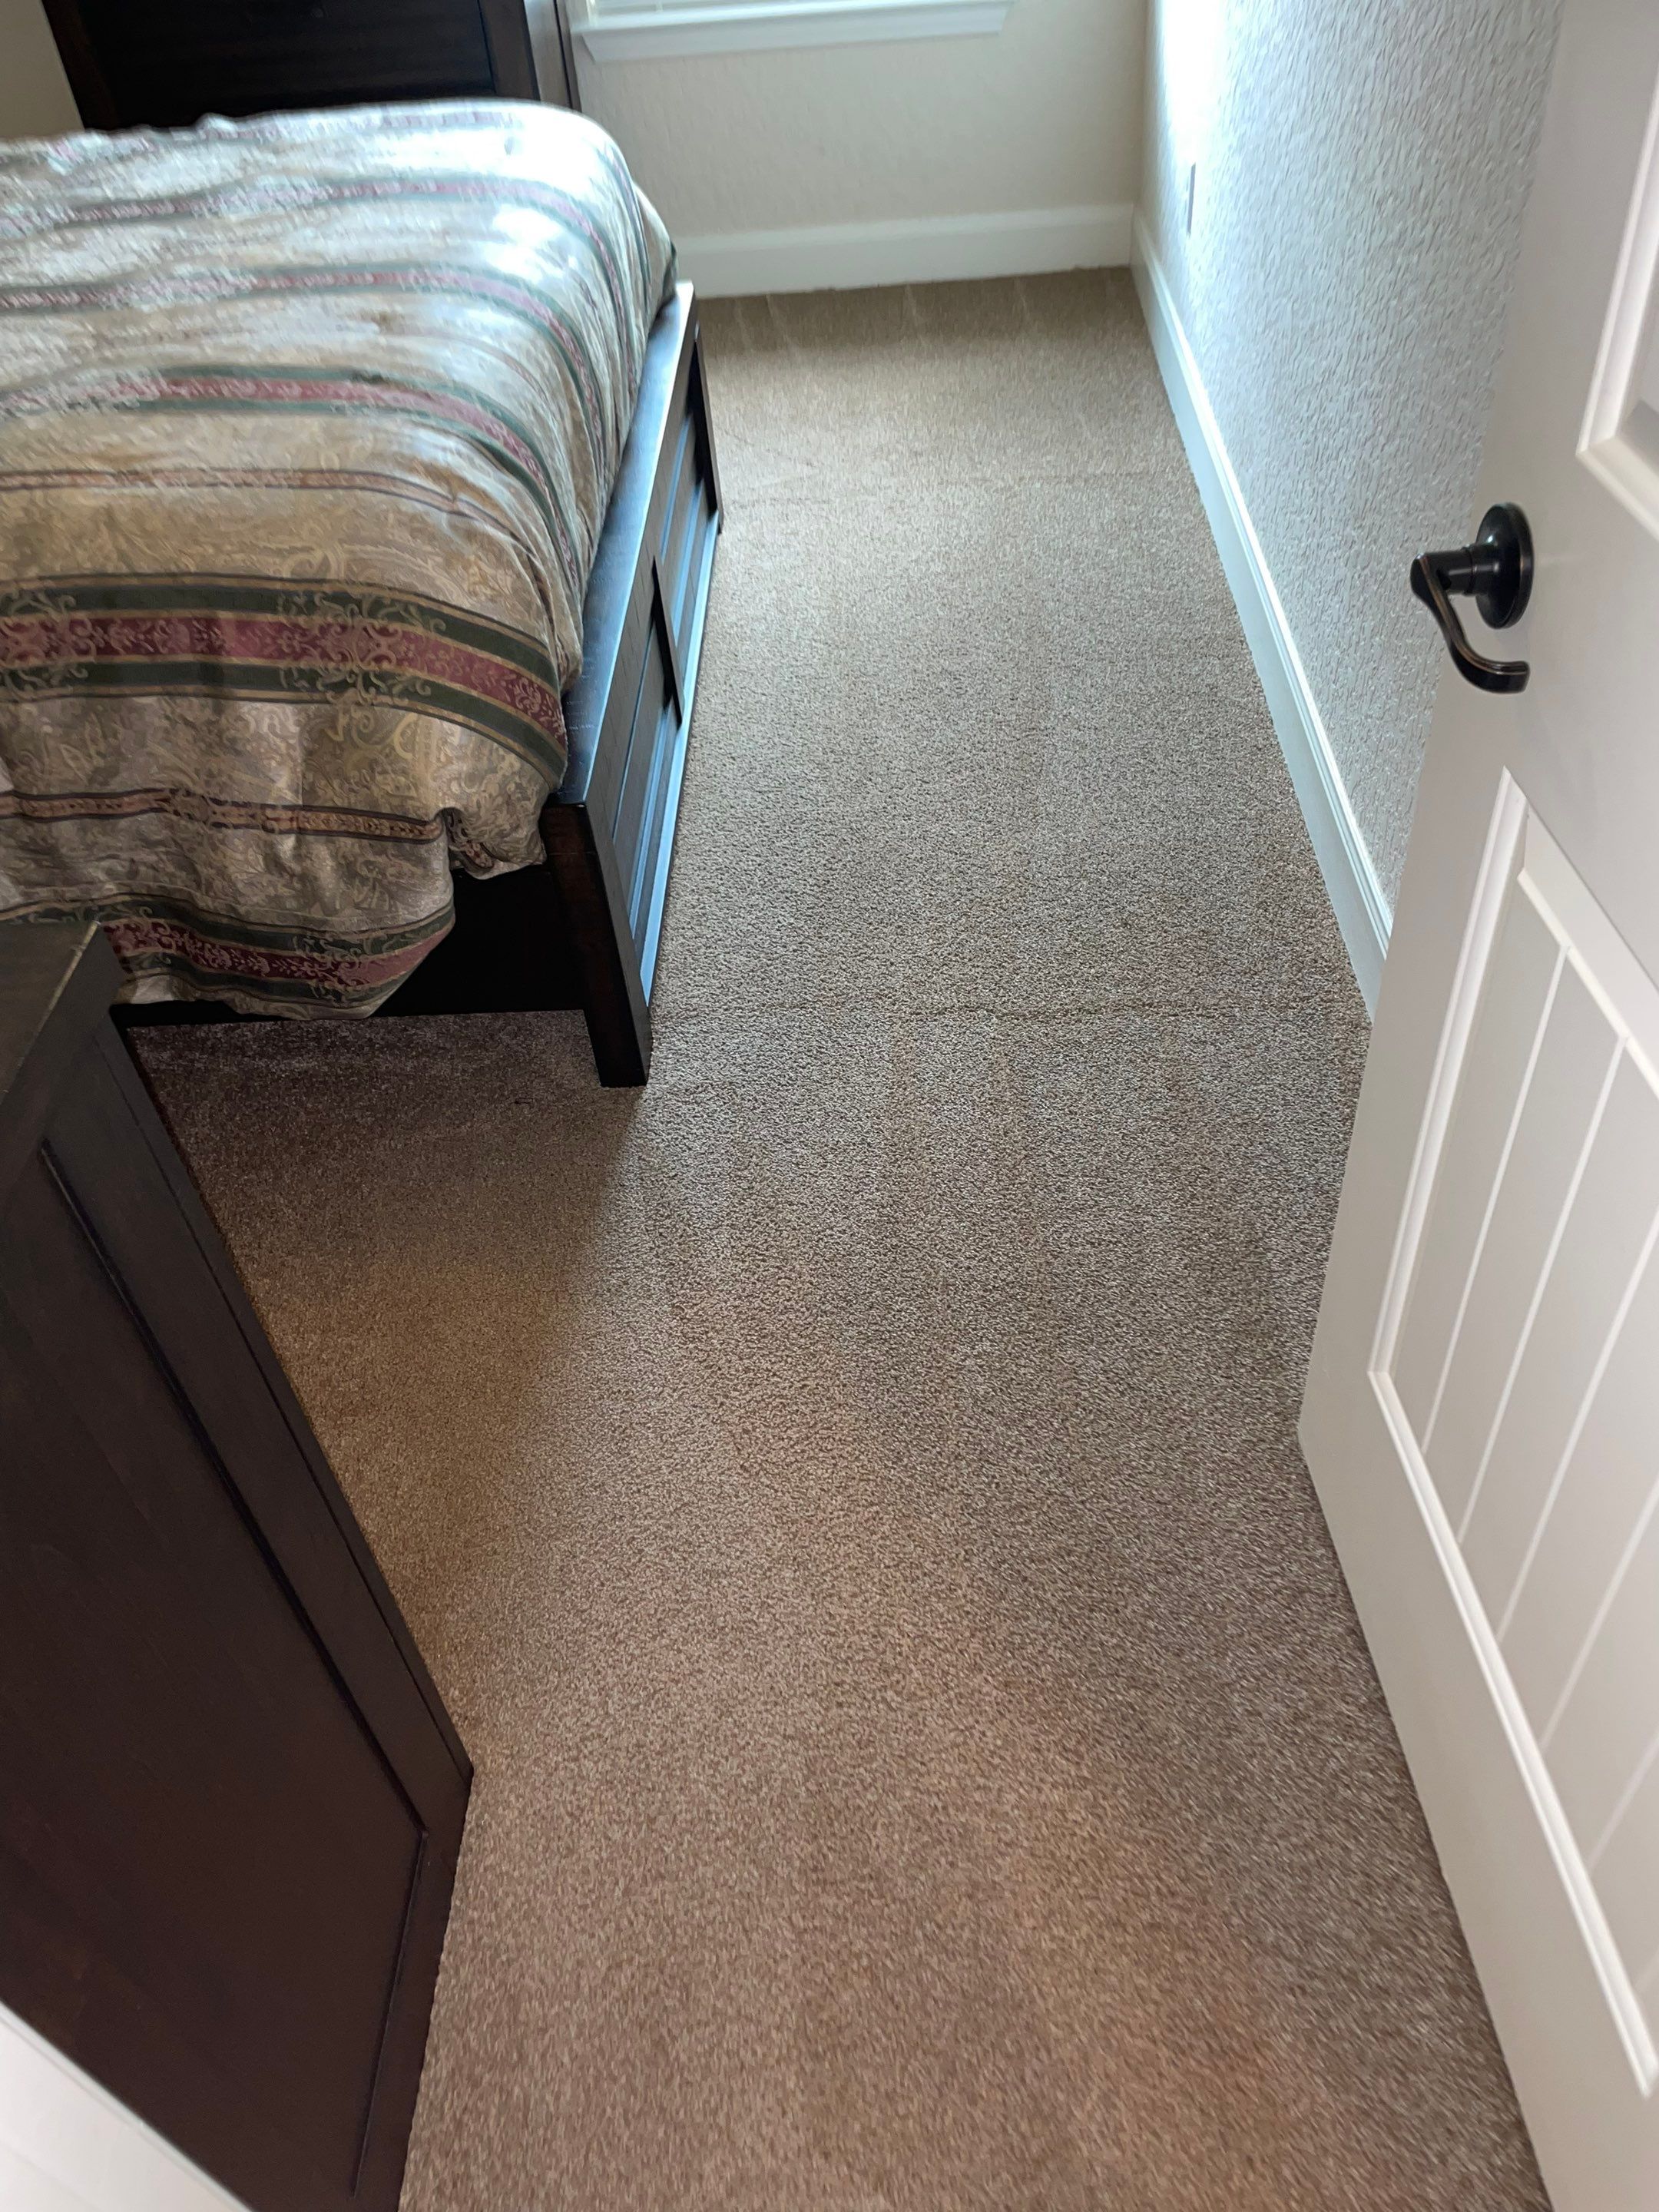 carpet cleaning service being performed on residential bedroom flooring